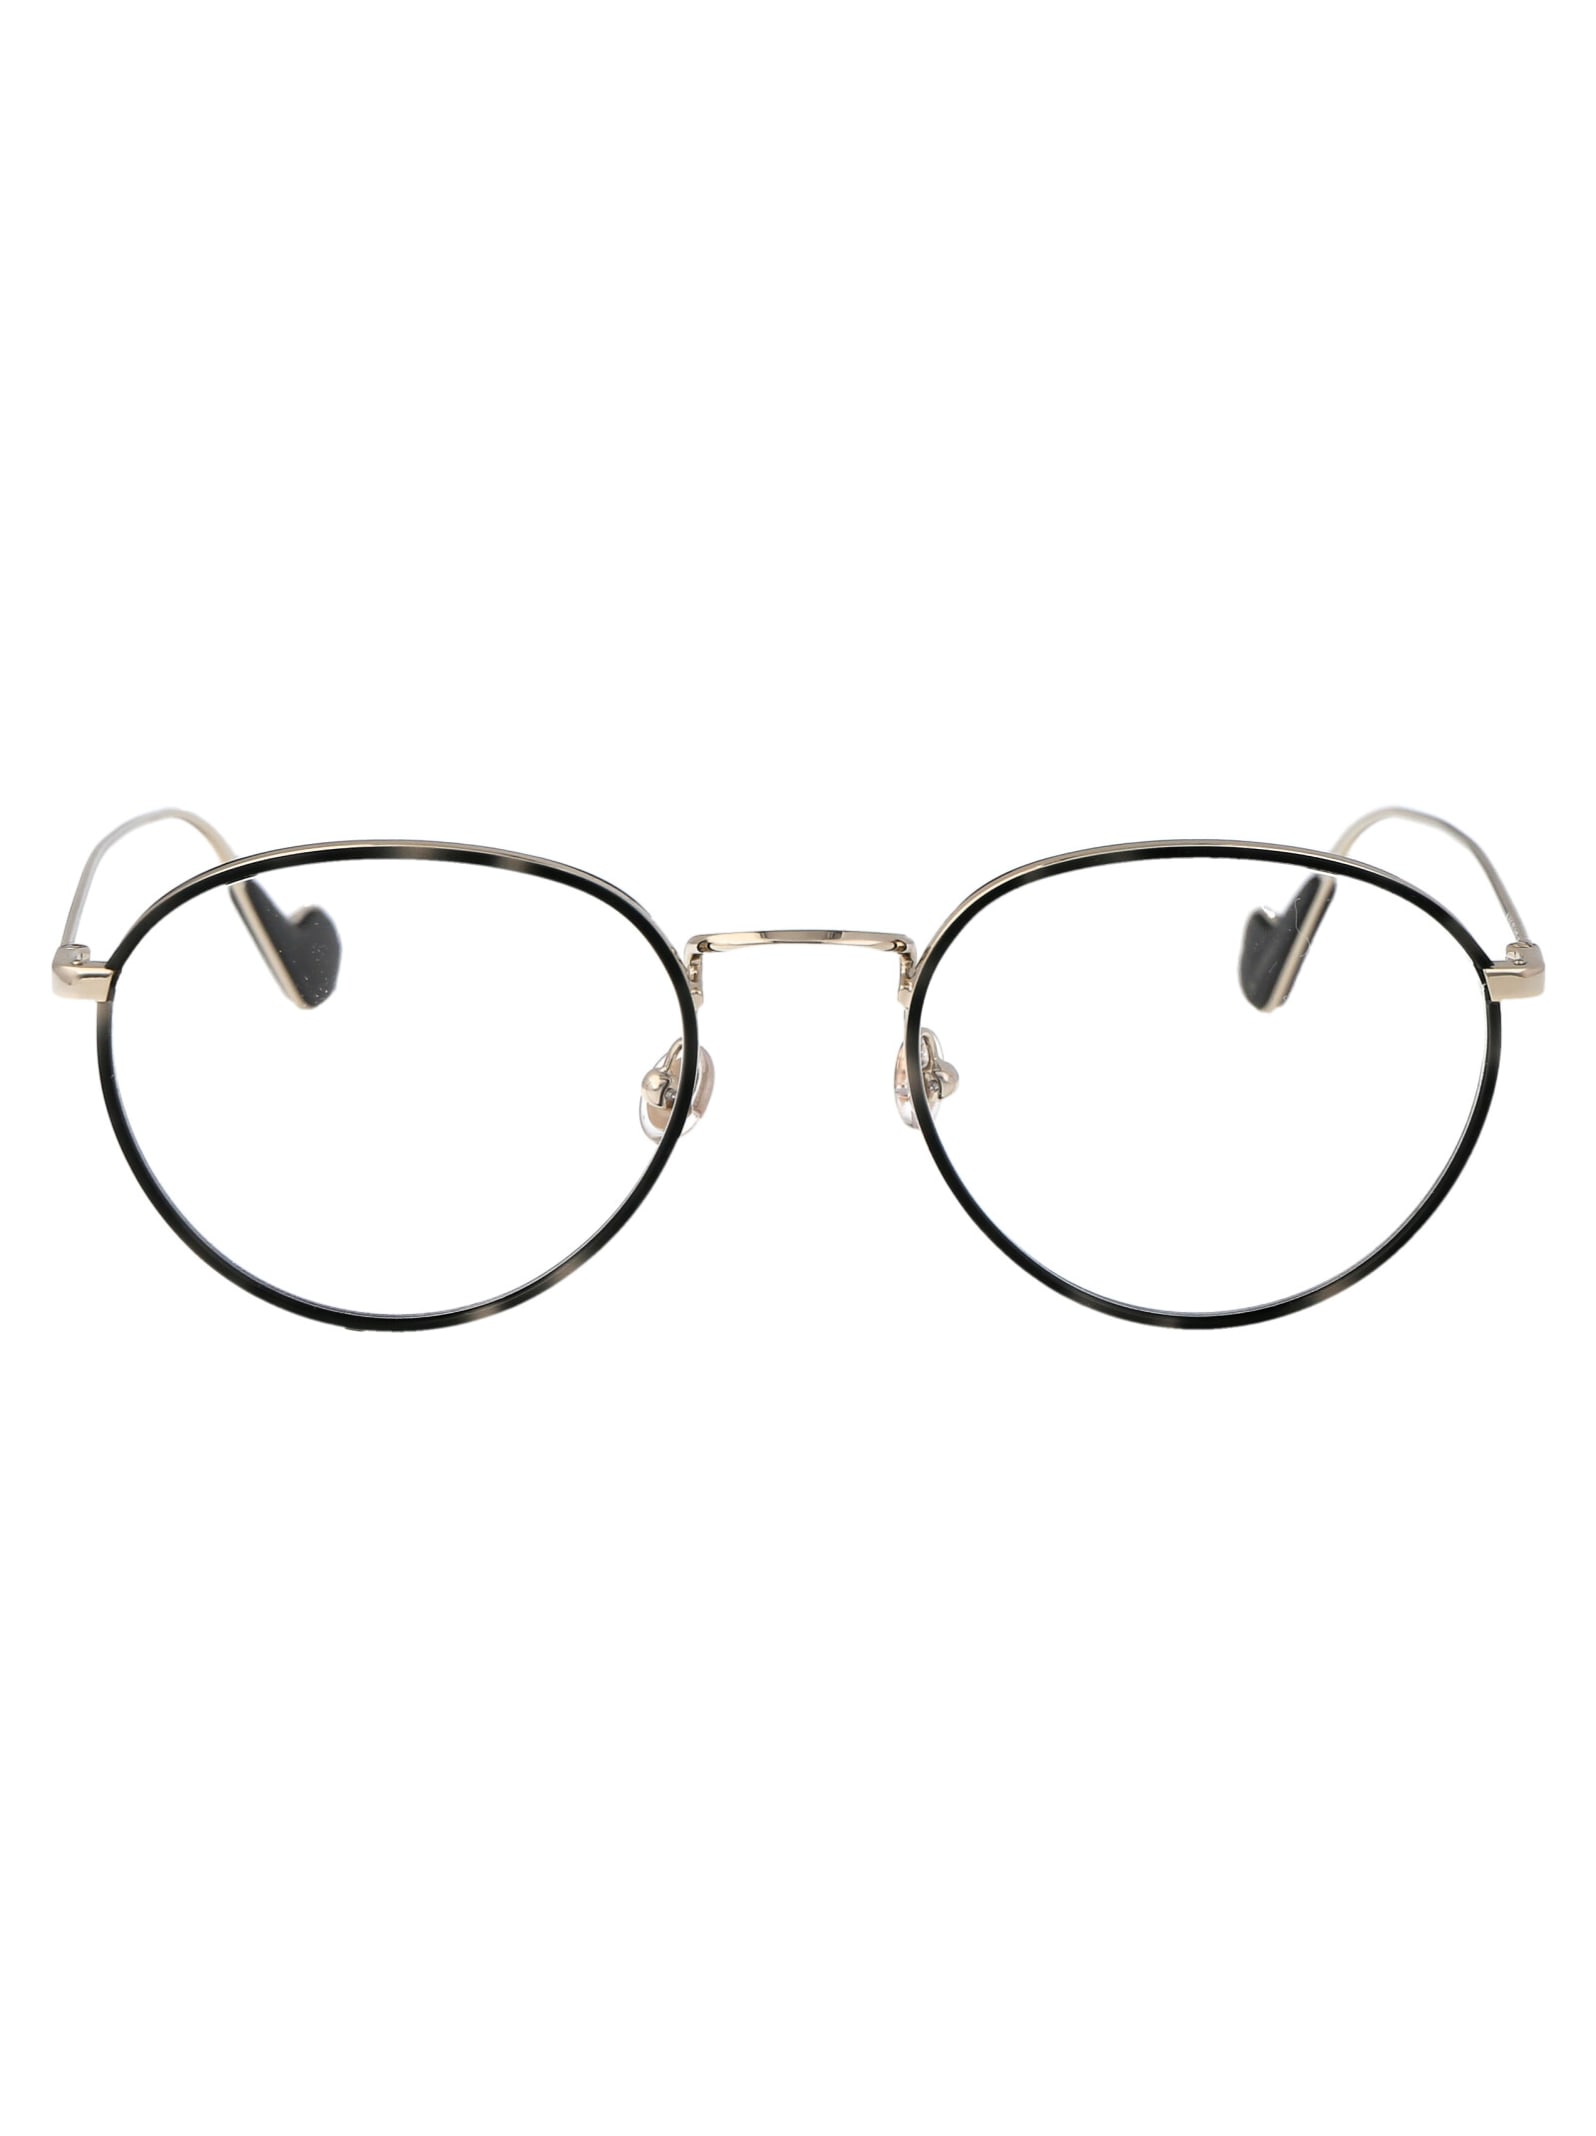 Moncler Ml5110 Glasses In 016 Nero Lucido